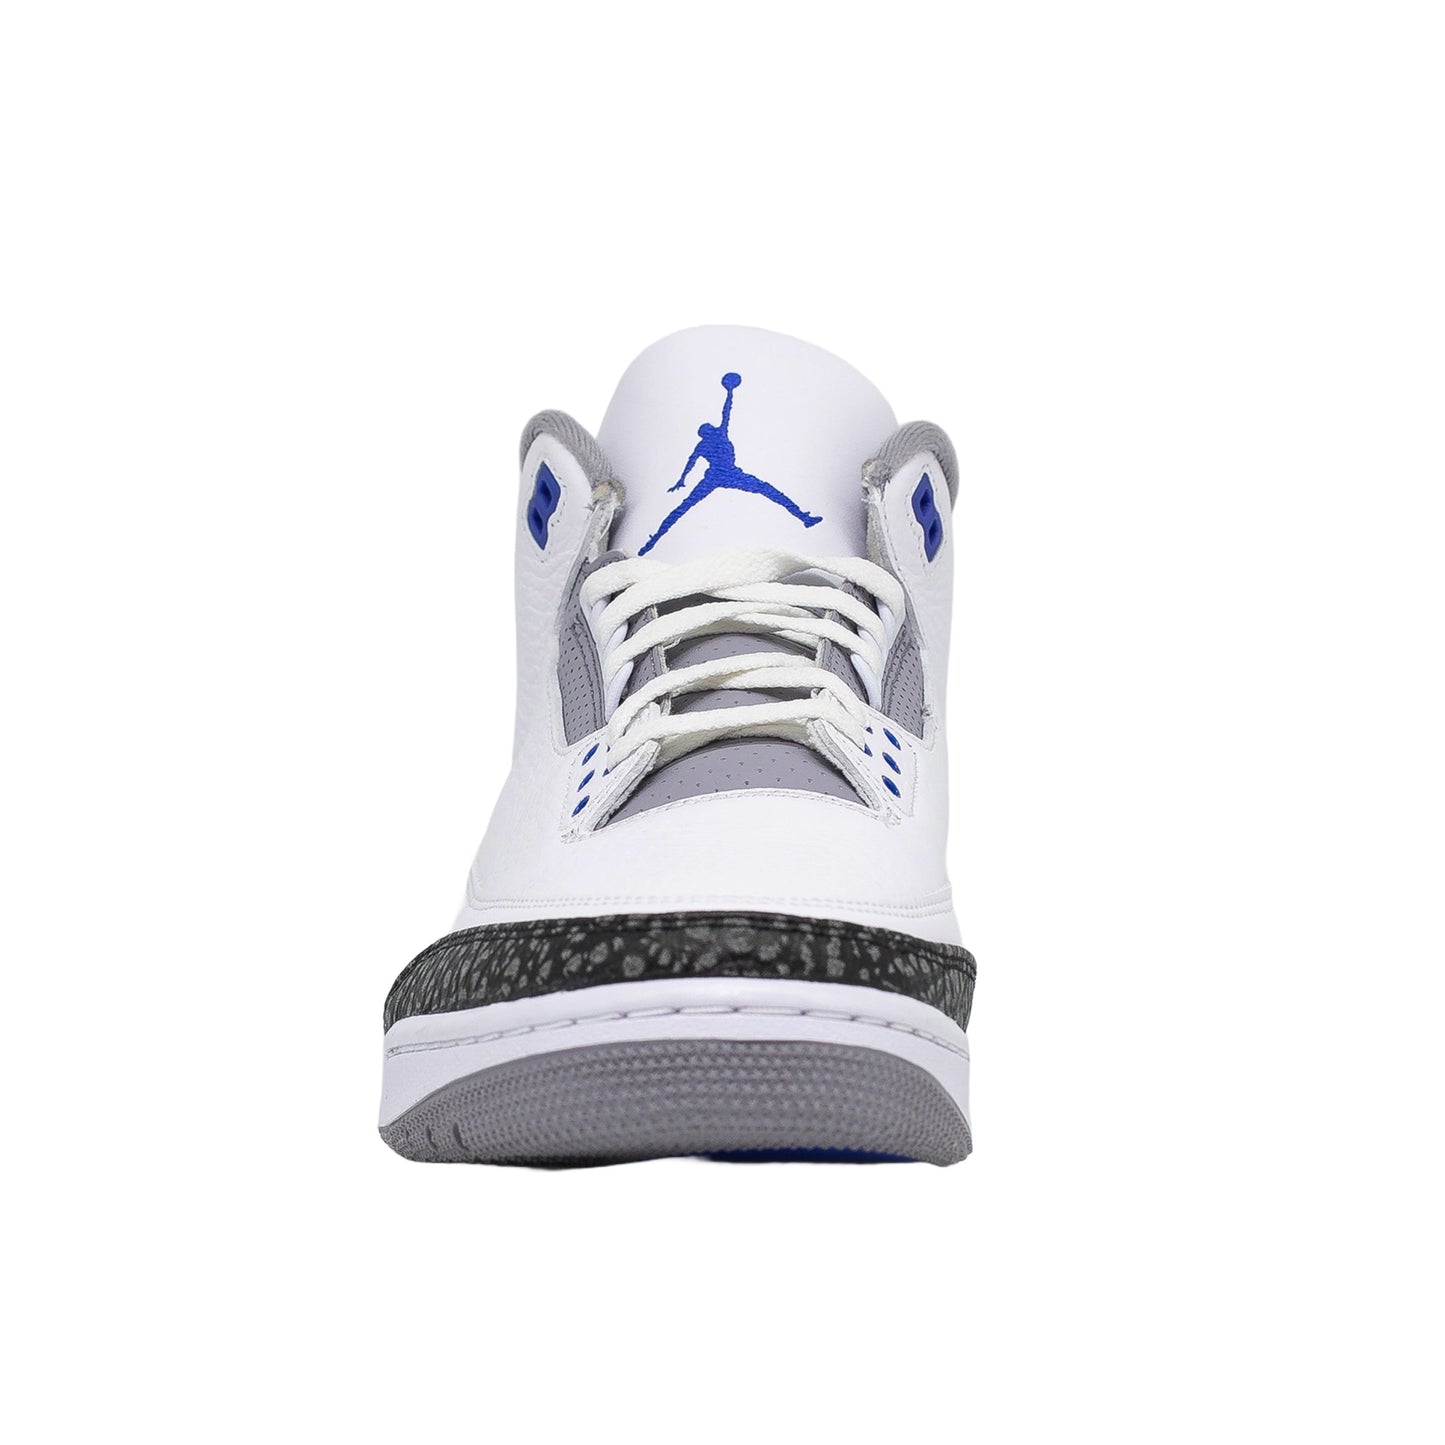 Air Jordan 3, Racer Blue